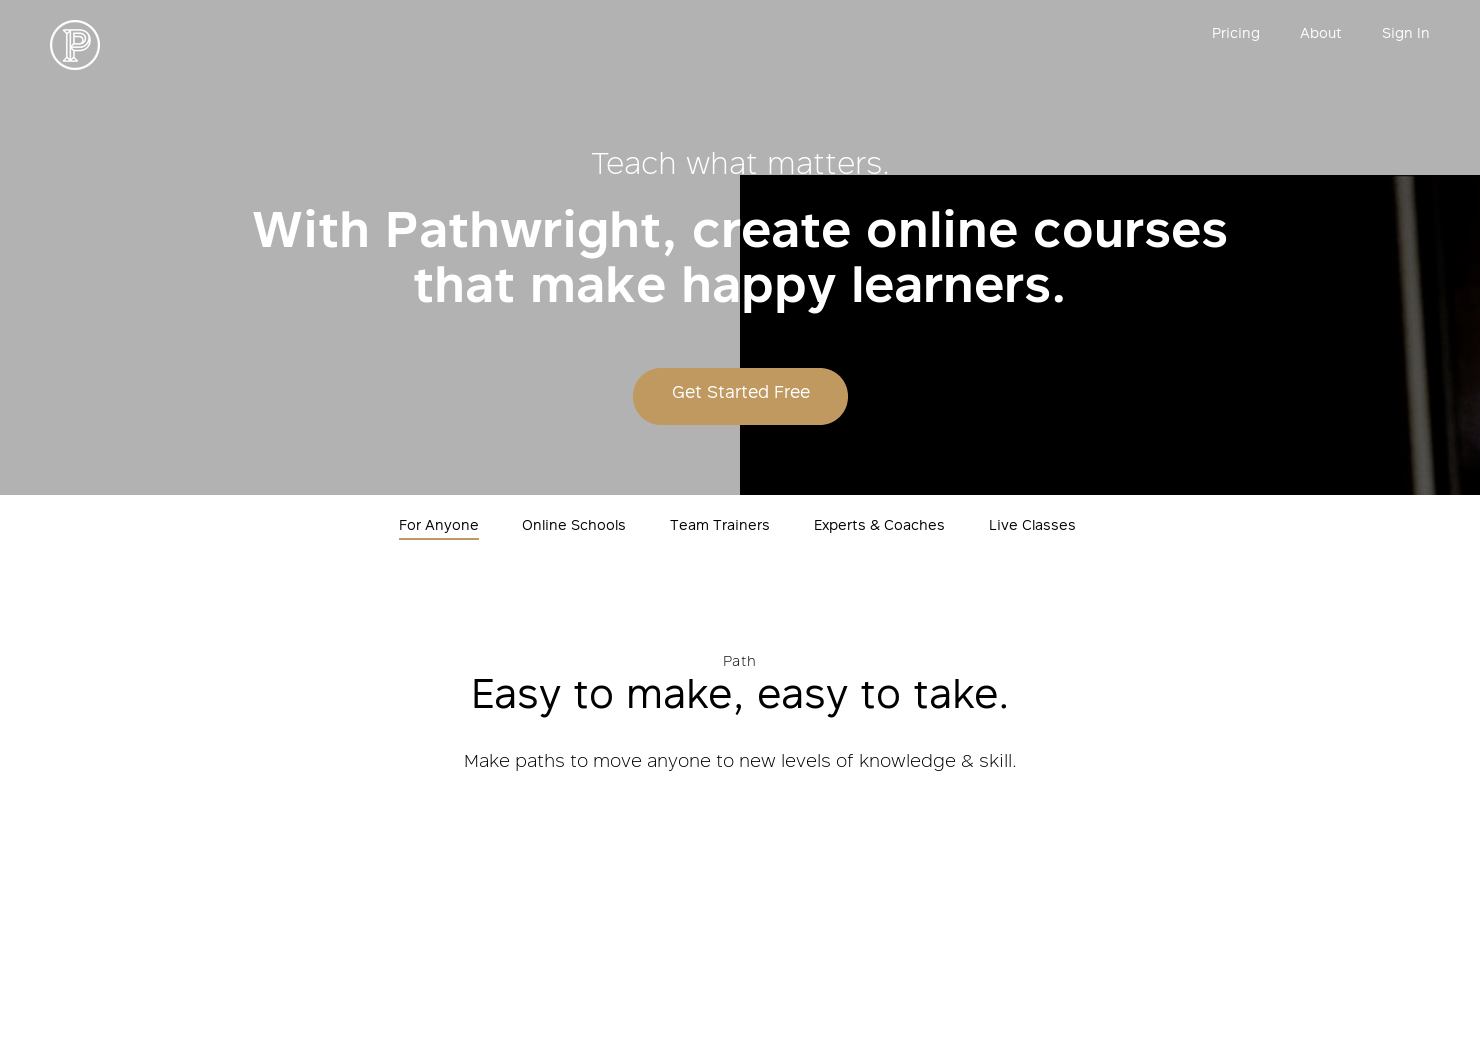 Pathwright